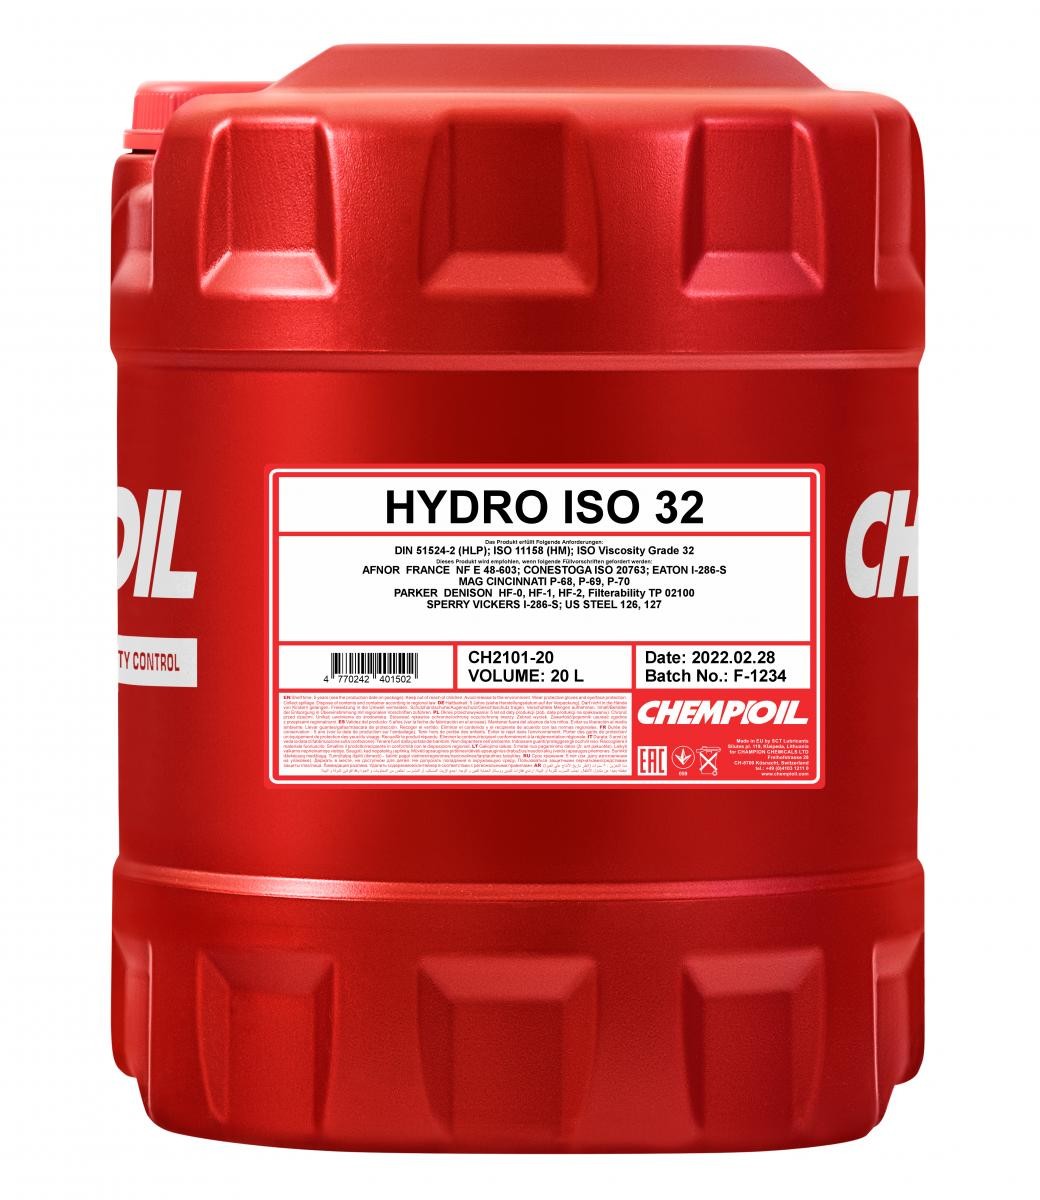 CHEMPIOIL Hydro, ISO 32 Capacity: 20l ISO 11158 HM, DIN 51524-2 HLP, Afnor NF E 48 Hydraulic fluid CH2101-20 buy